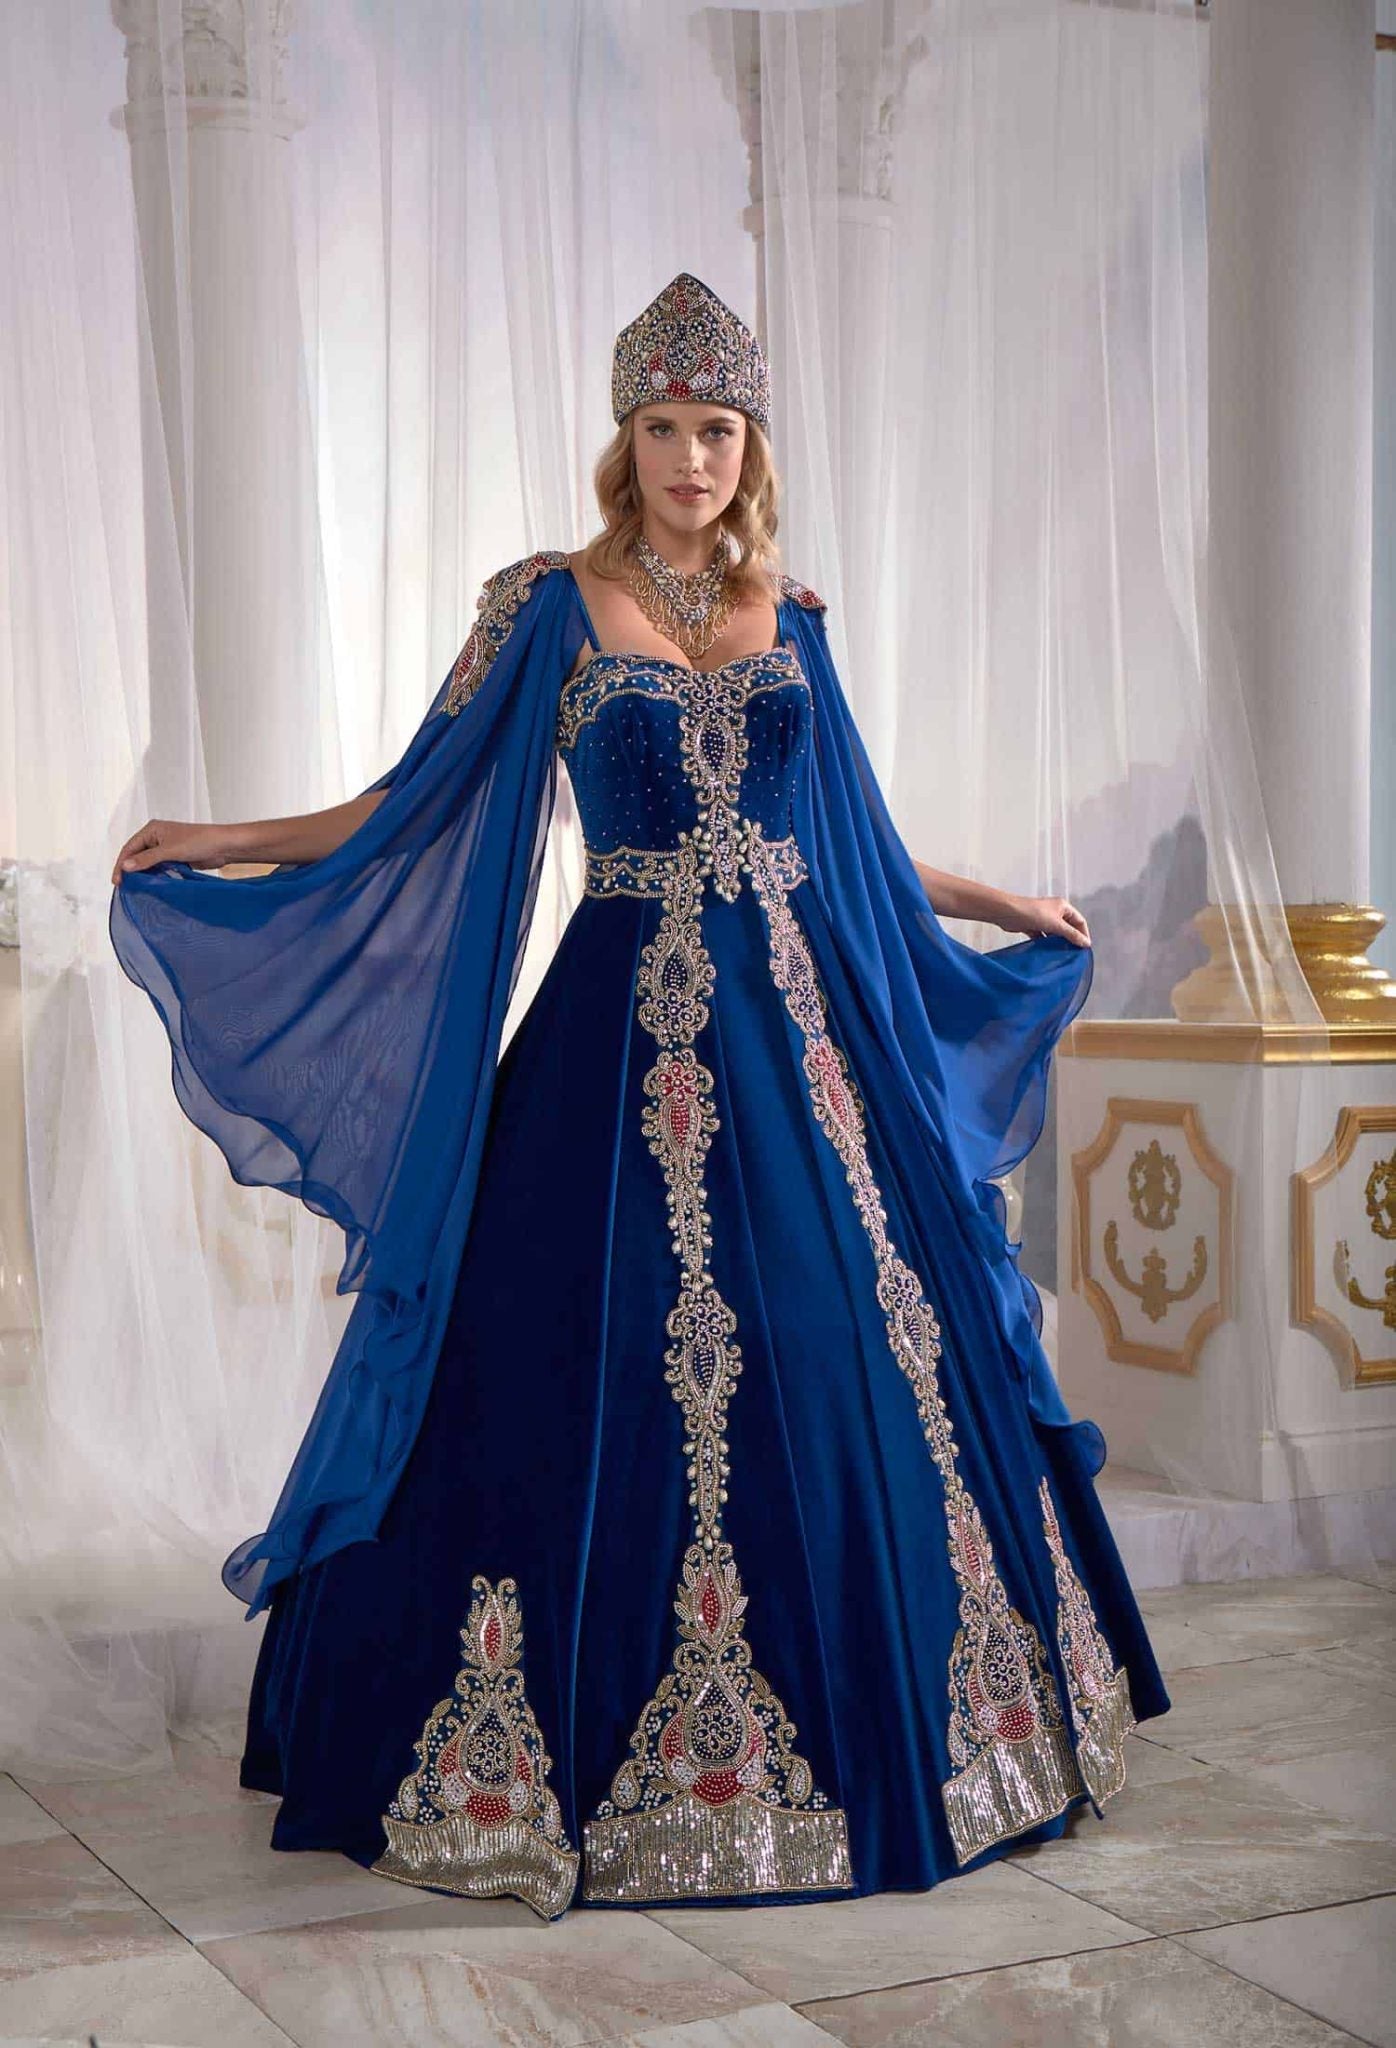 Dark Blue Panels Velvet Tulle Cape Cut Out Detail Ottoman Sultan Caftan Dresses (3)